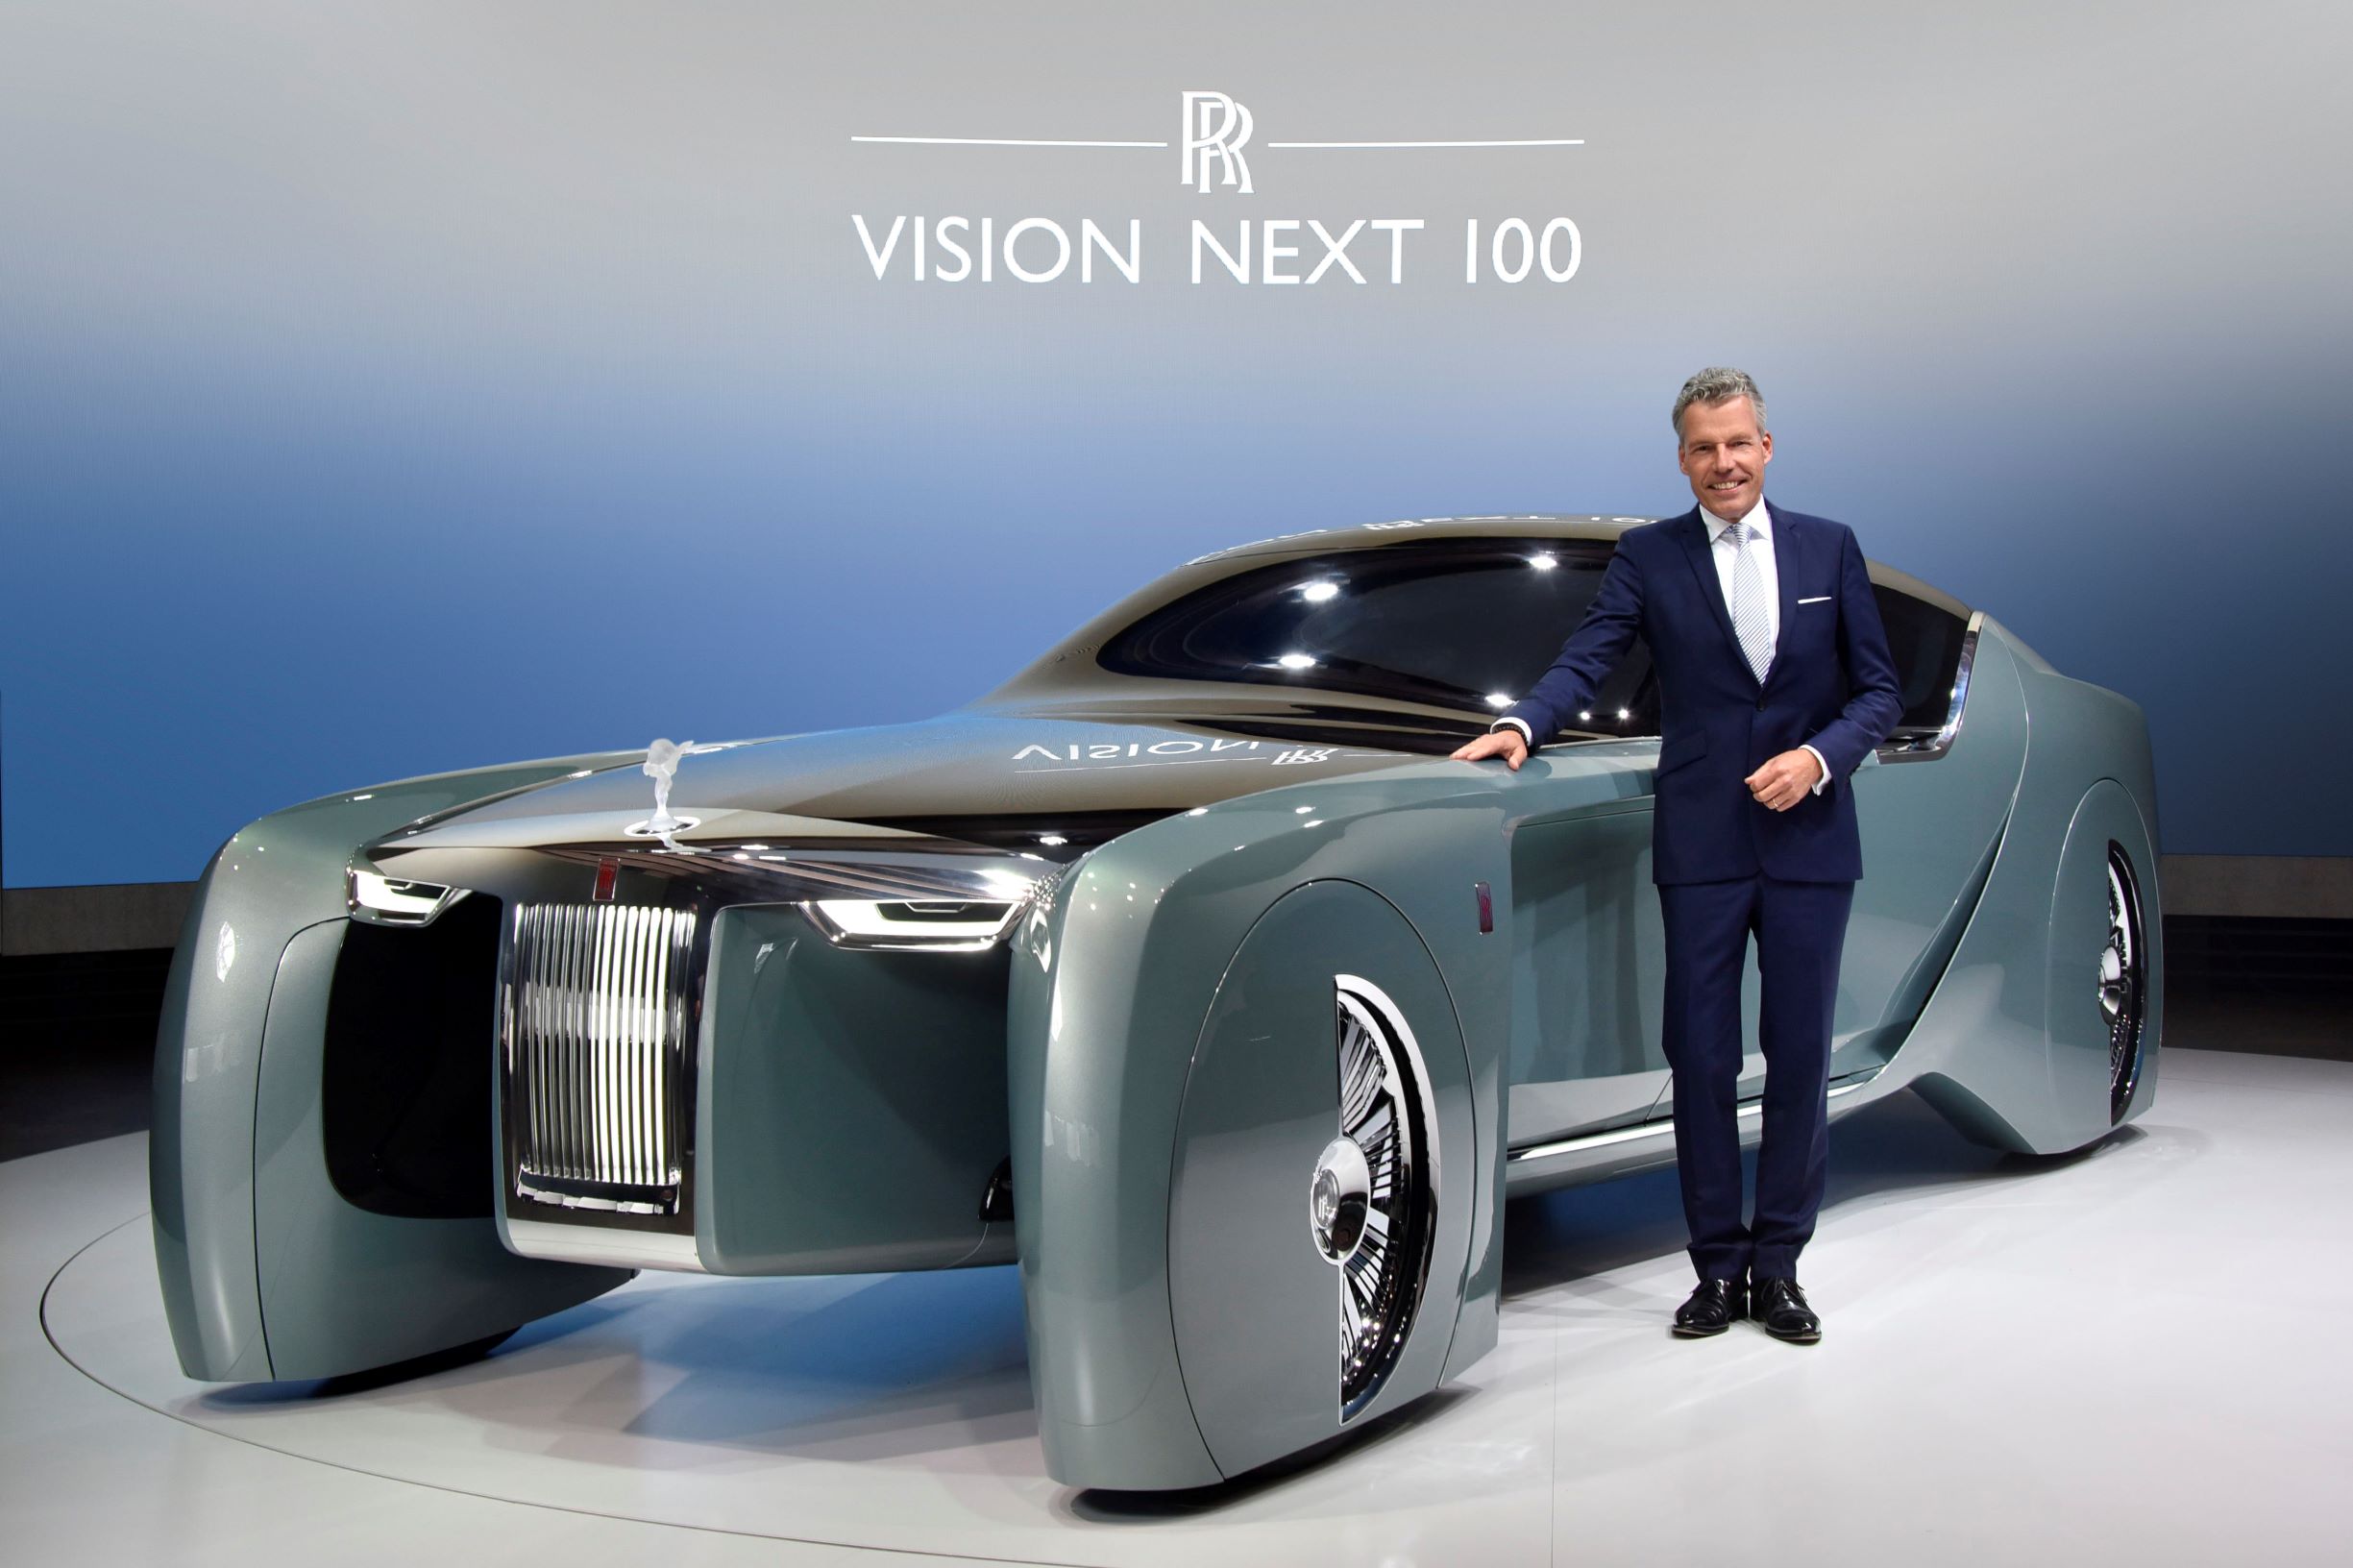 Rolls-Royce: Own The Quintessential Ultra-Luxury Car